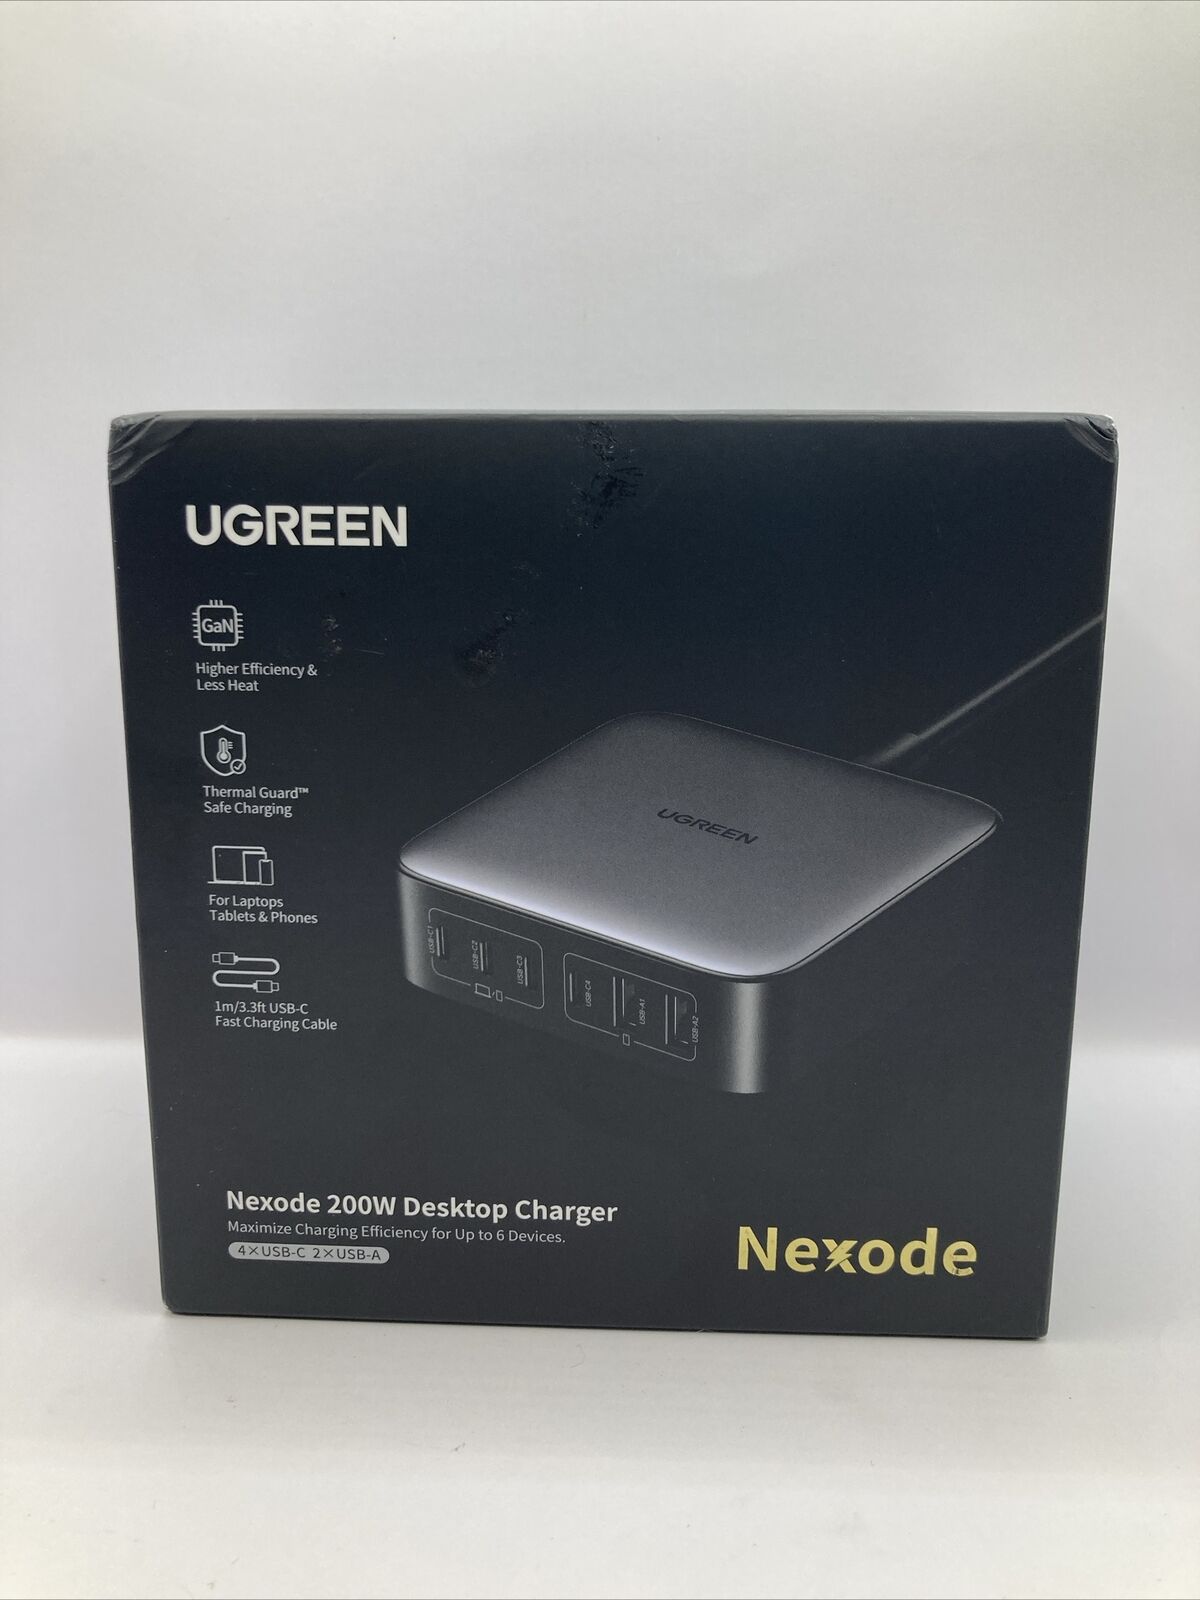 UGREEN 200W USB C Charger, Nexode 6 Ports GaN Desktop Charger, USB C Charging...